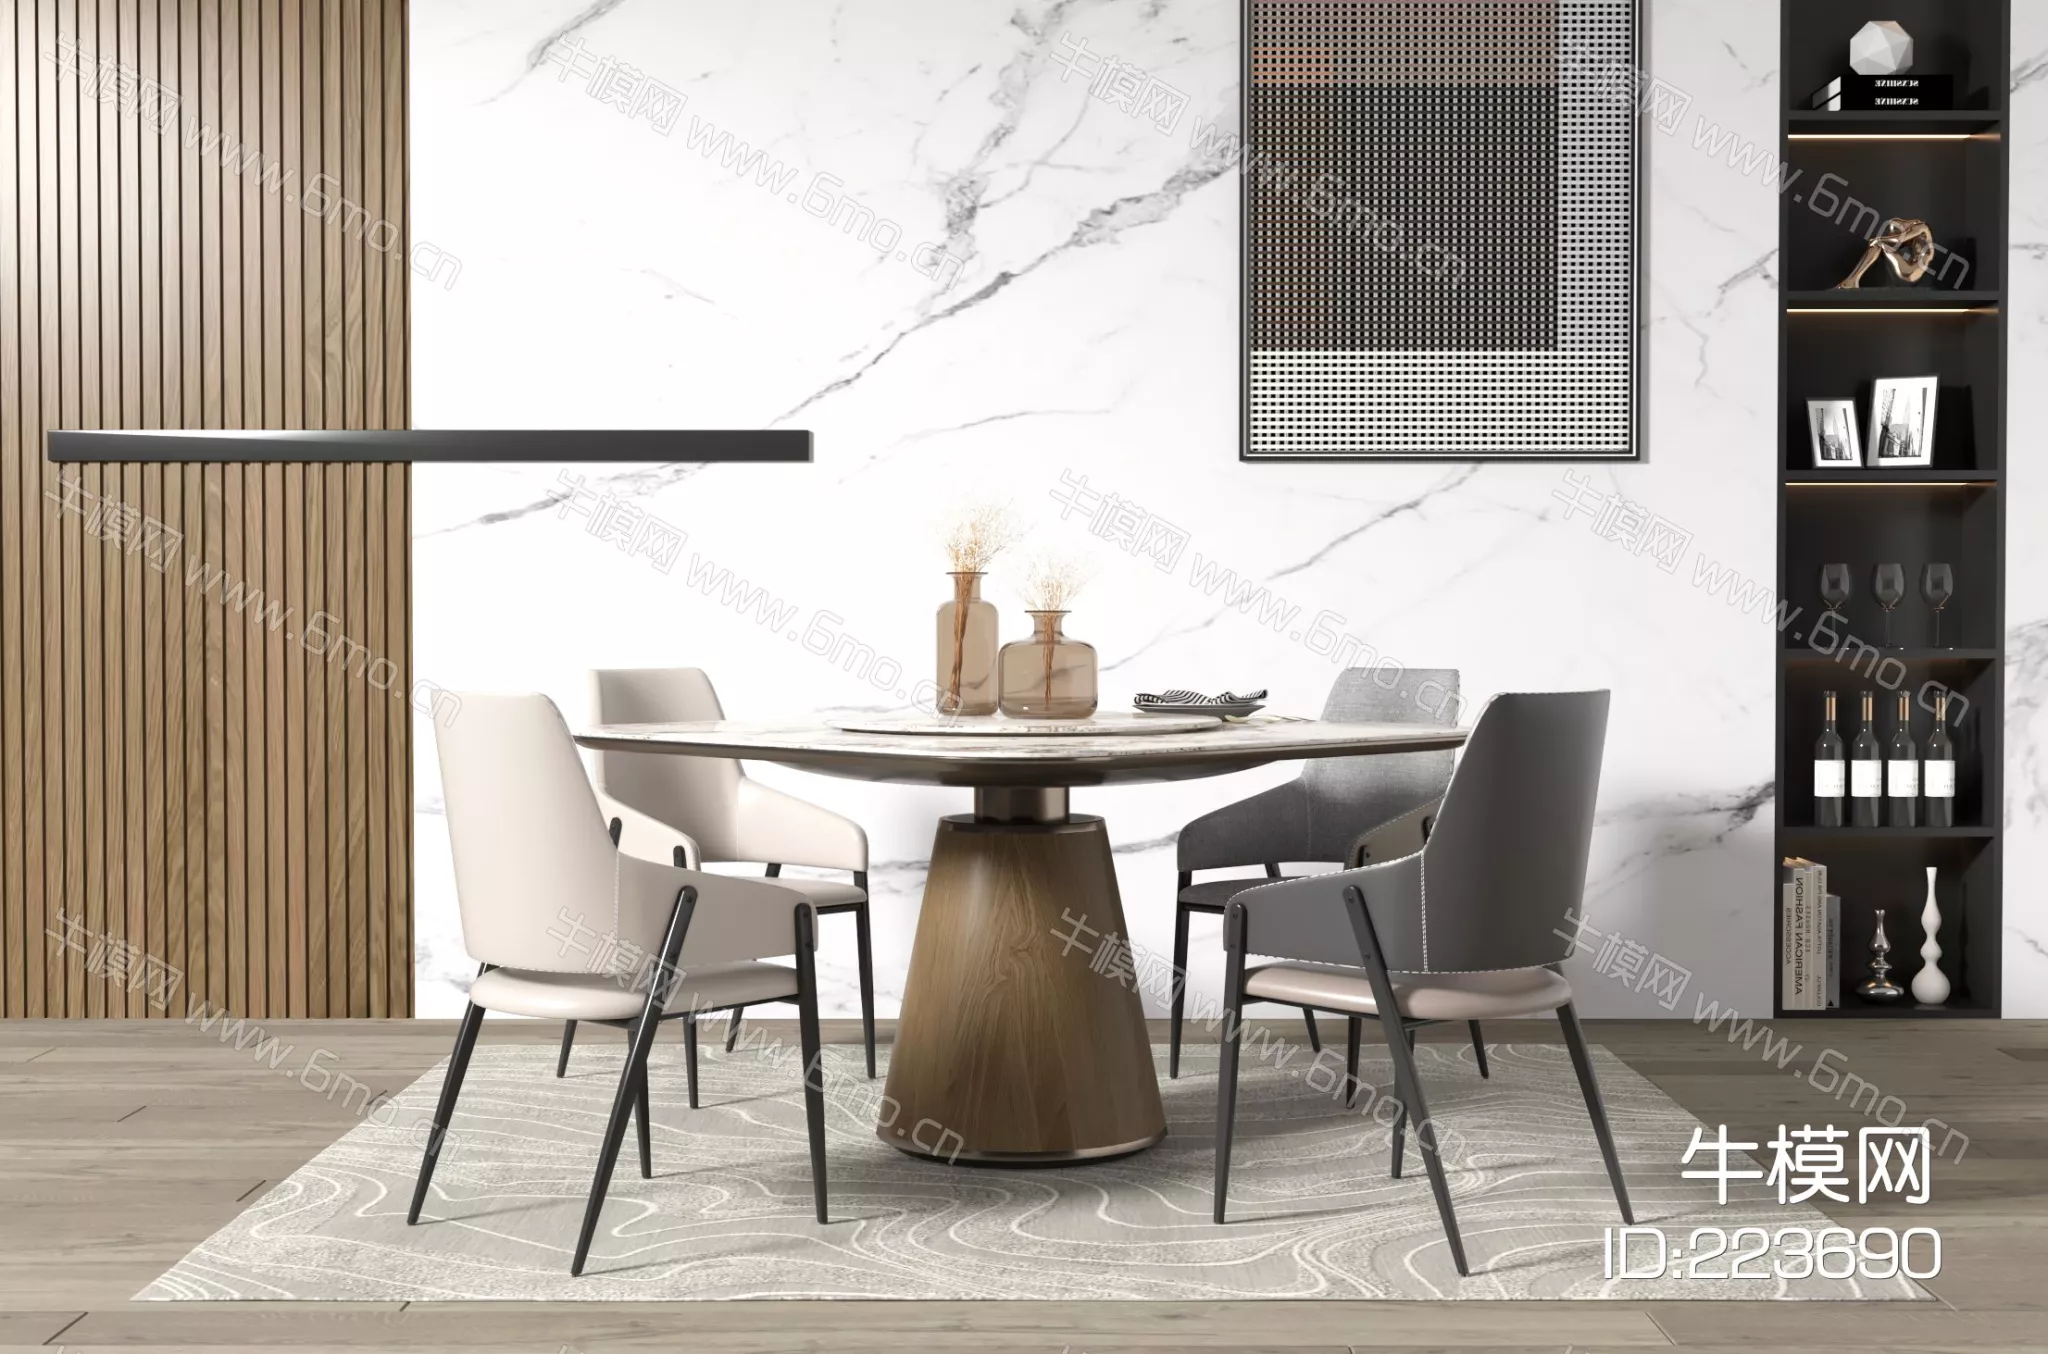 MODERN DINING TABLE SET - SKETCHUP 3D MODEL - VRAY - 223690